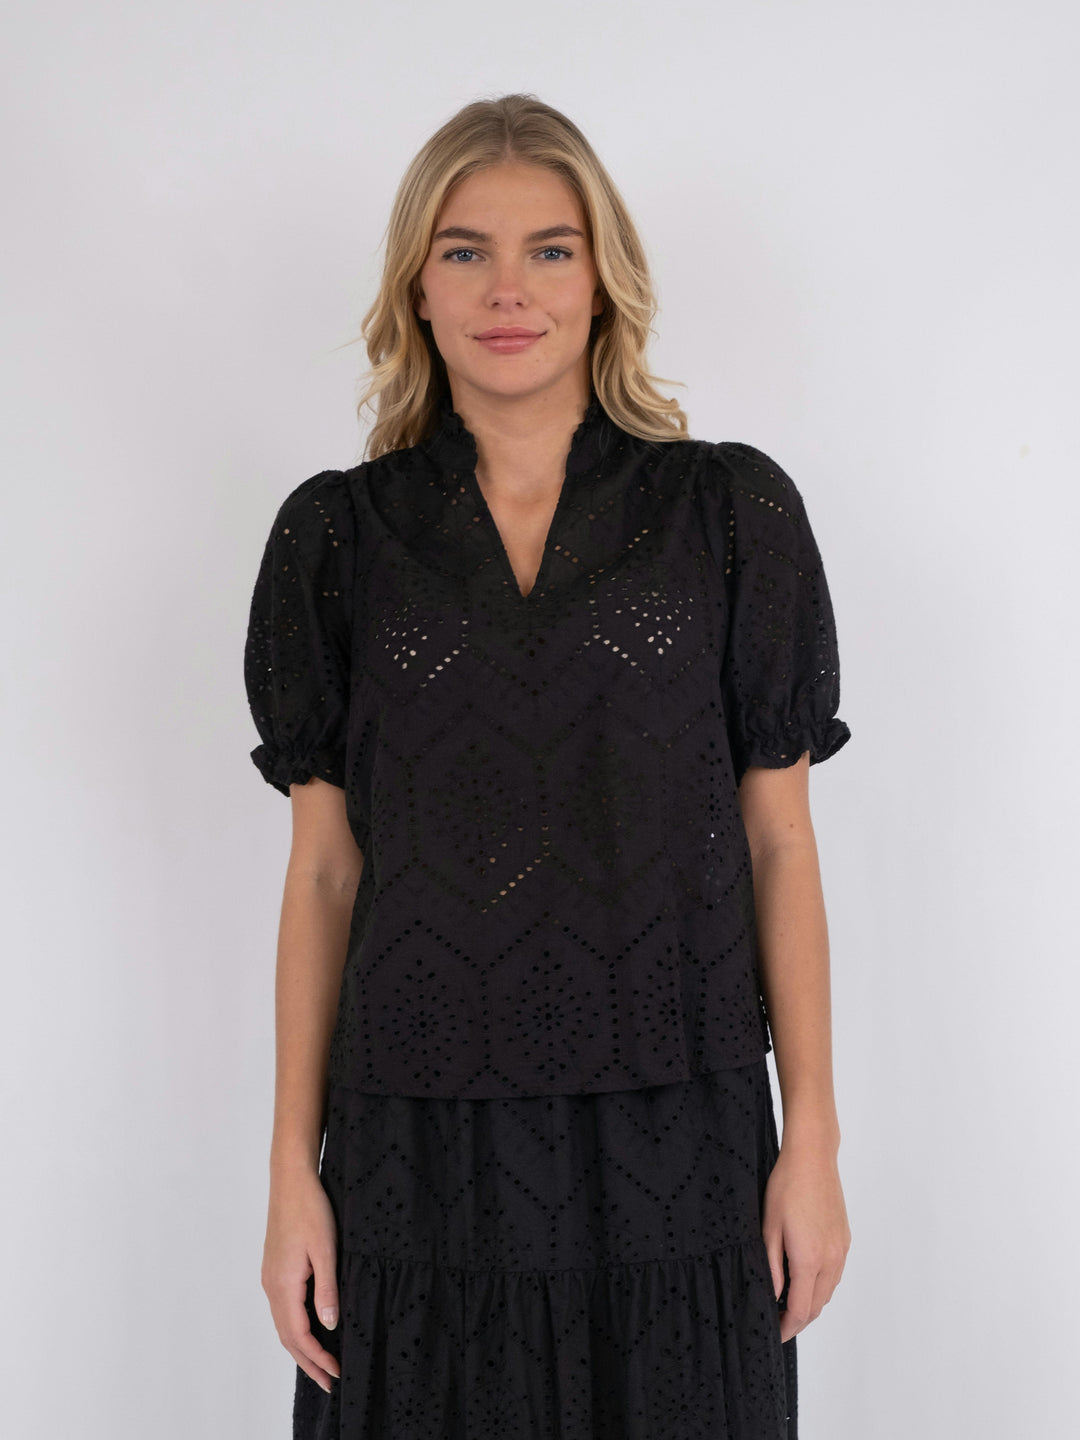 Neo Noir - Odesa Embroidery Blouse - Black